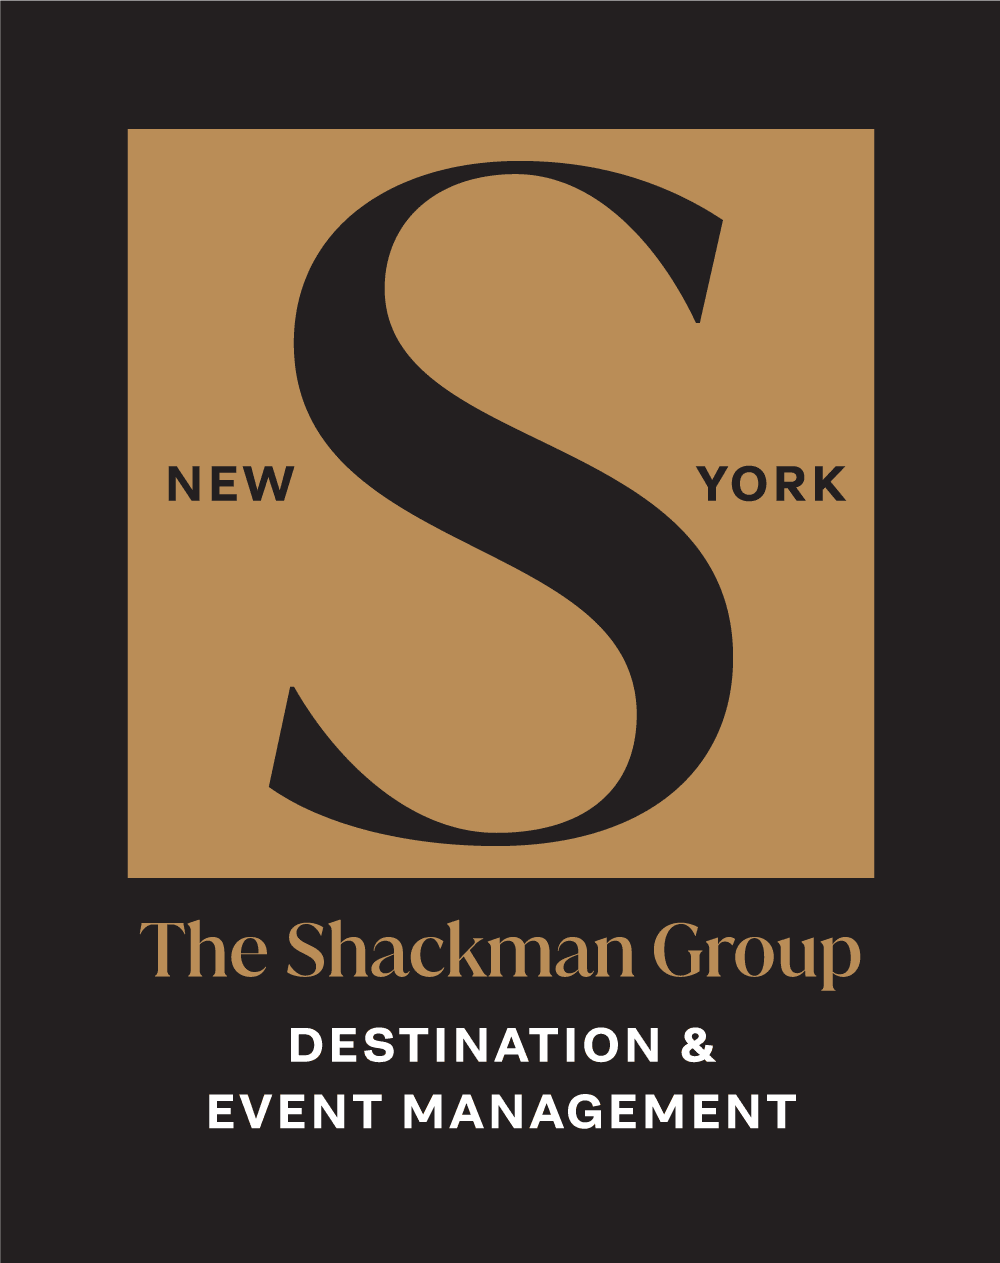 The Shackman Group DMC New York